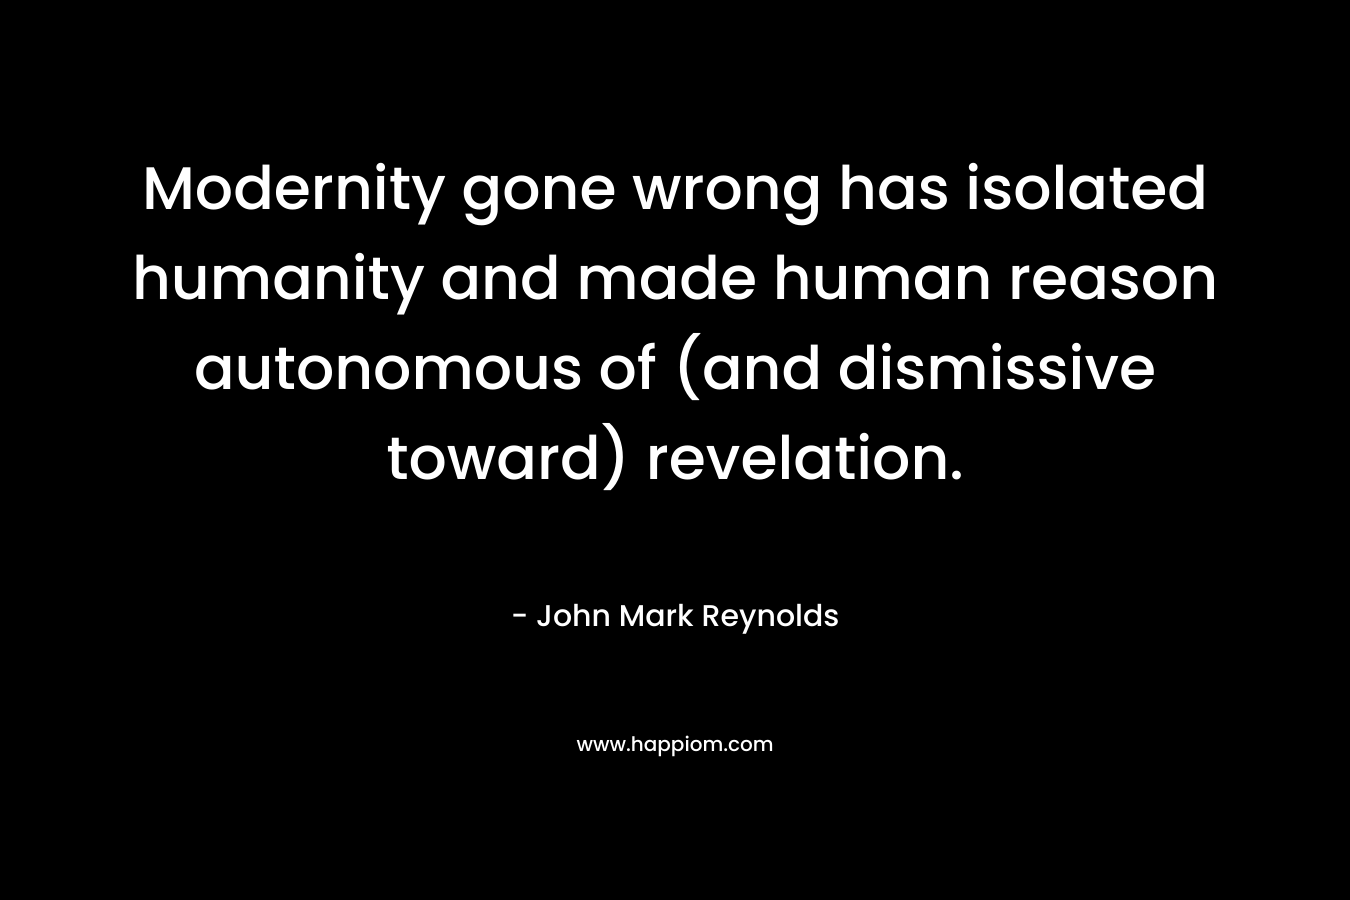 Modernity gone wrong has isolated humanity and made human reason autonomous of (and dismissive toward) revelation. – John Mark Reynolds